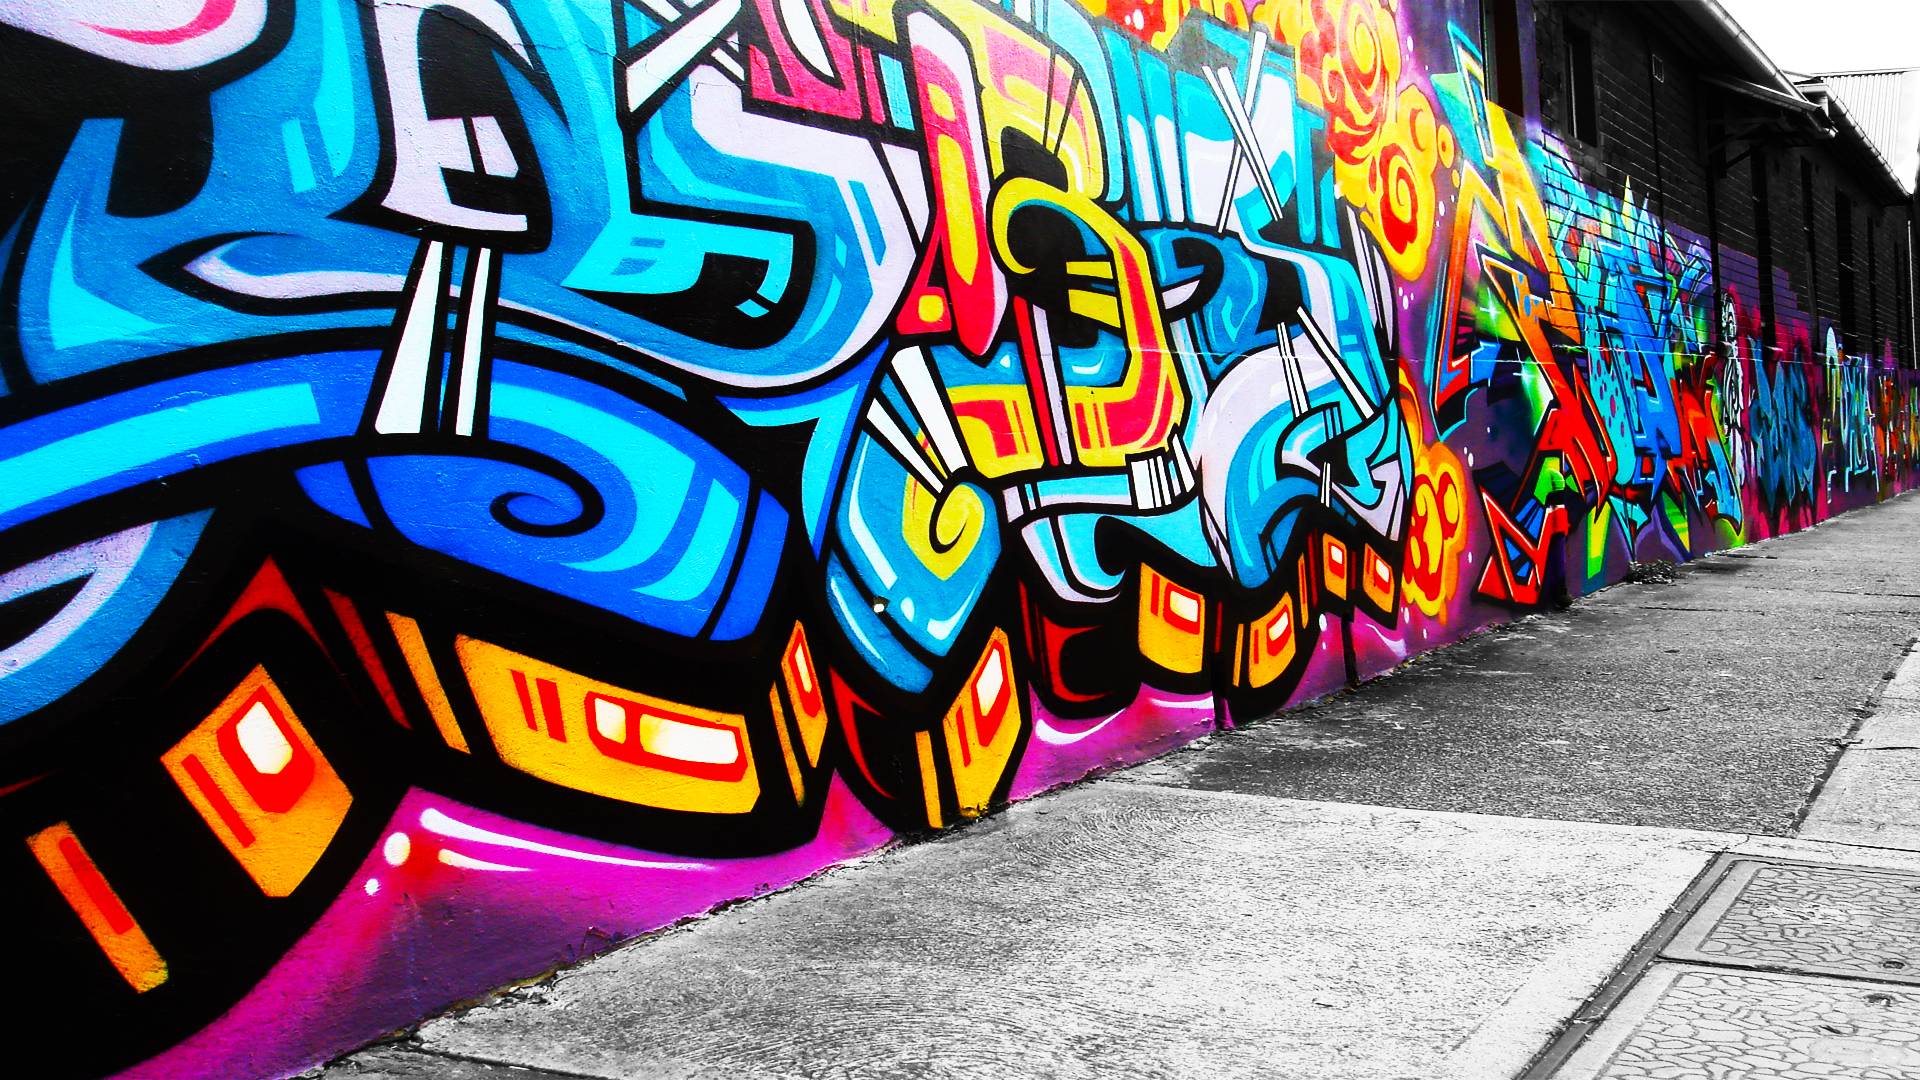 HD Graffiti Wallpapers - Wallpaper Cave